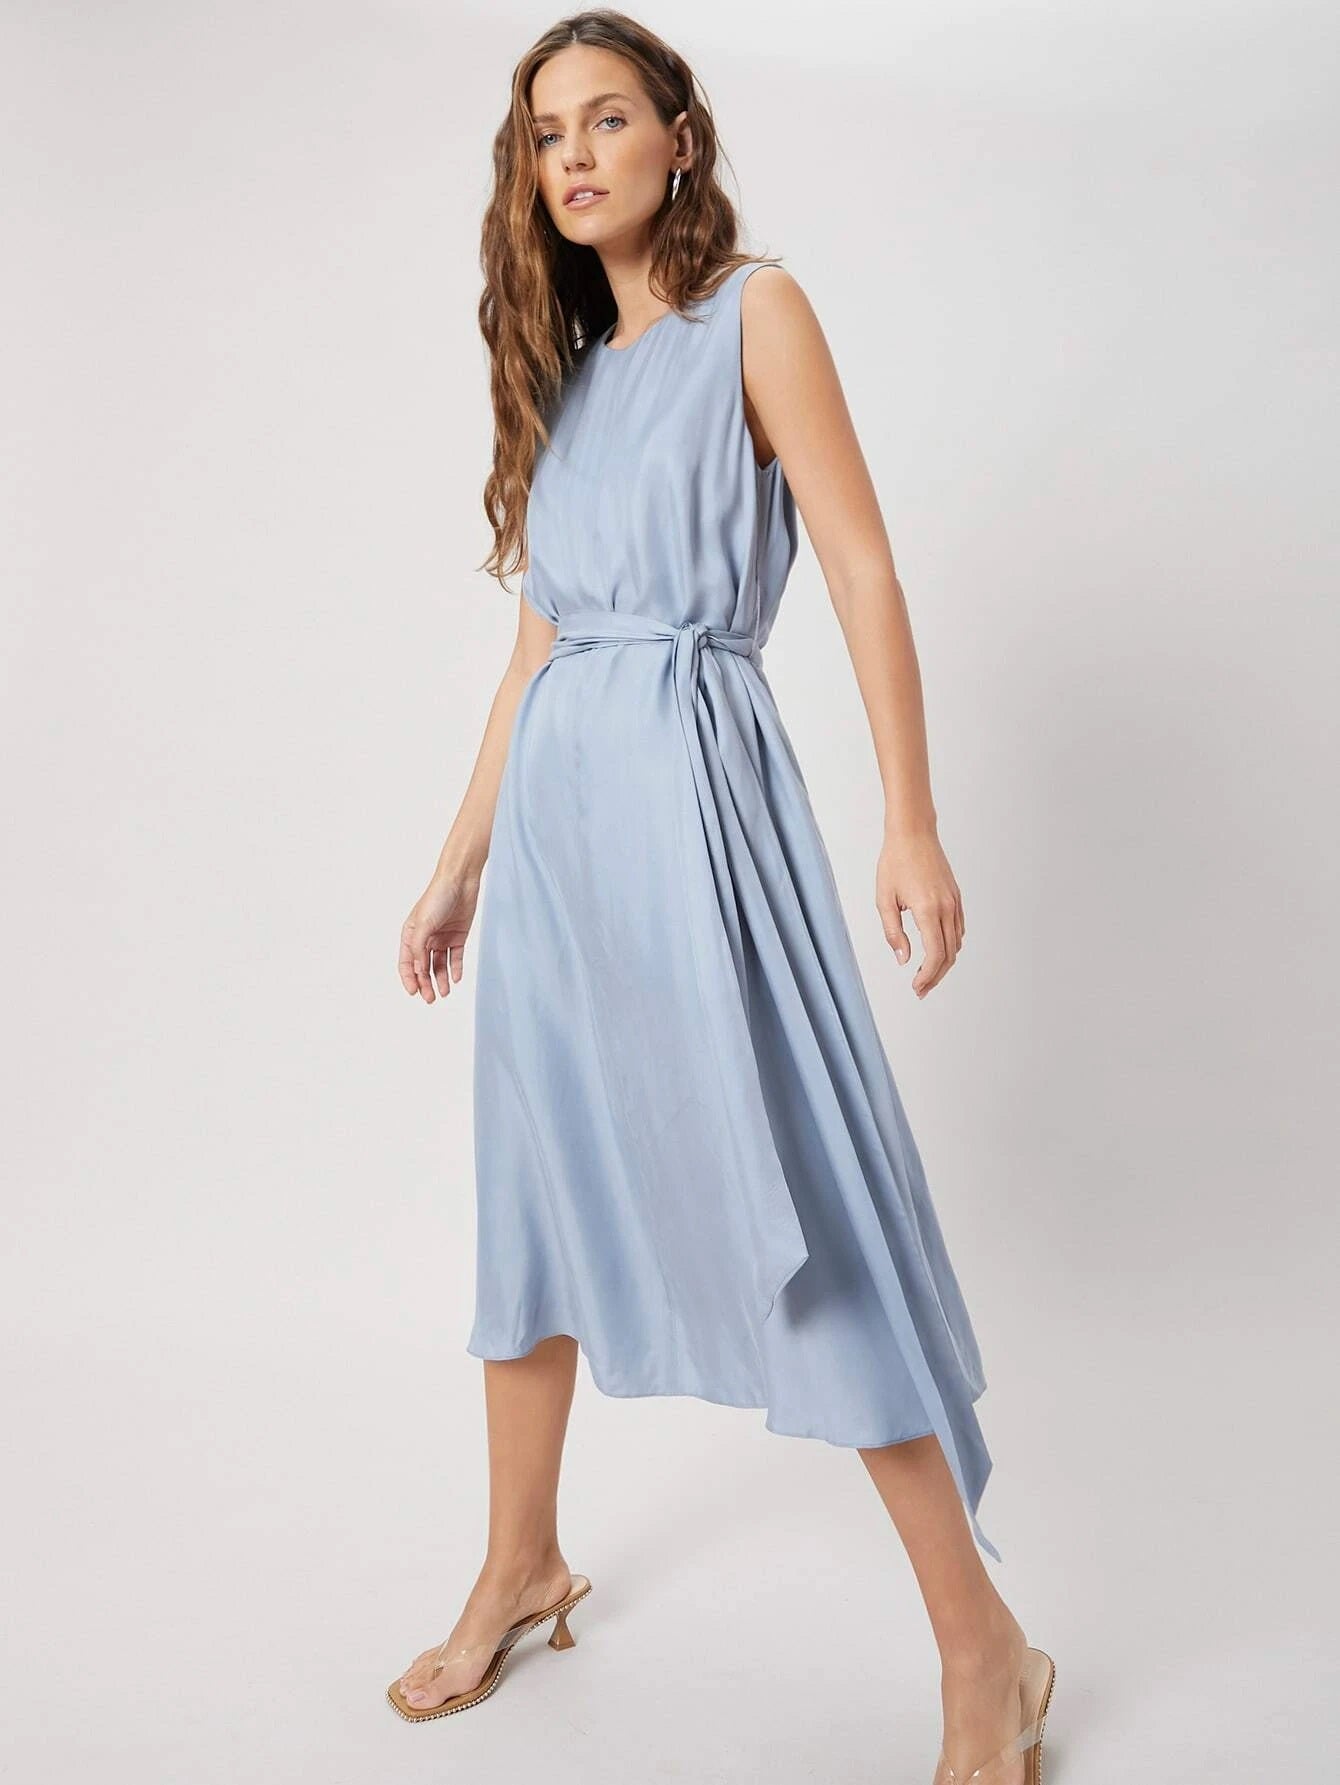 CM-ES414096 Women Elegant Seoul Style Round Neck Sleeveless Flowy Belted Dress - Baby Blue